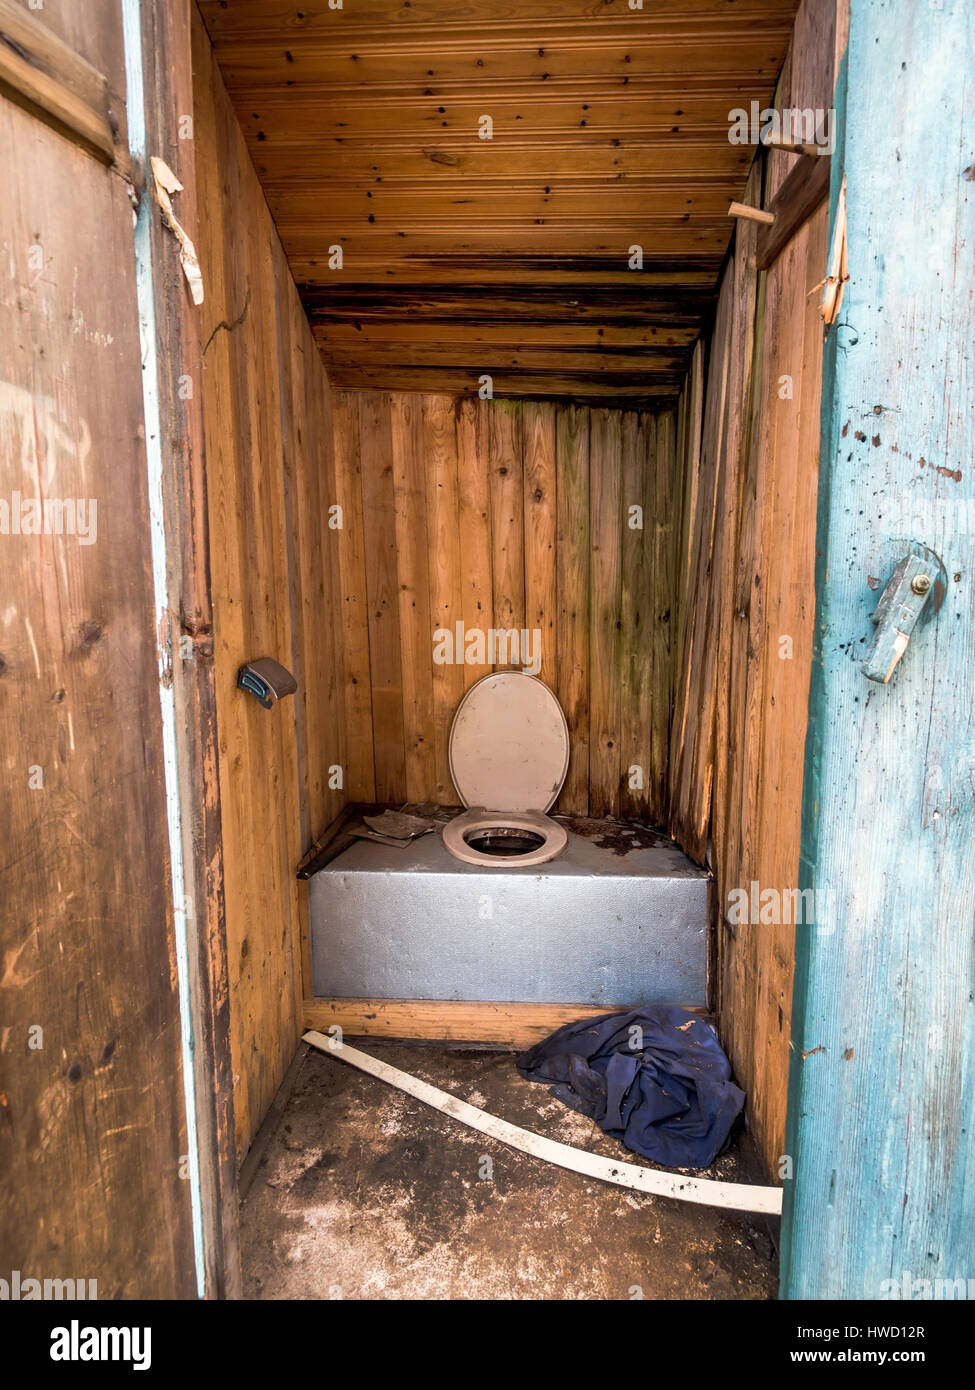 Toilet outside in old, desolate house., Toilette im Freien in einem alte, verlassenen Haus. Stock Photo